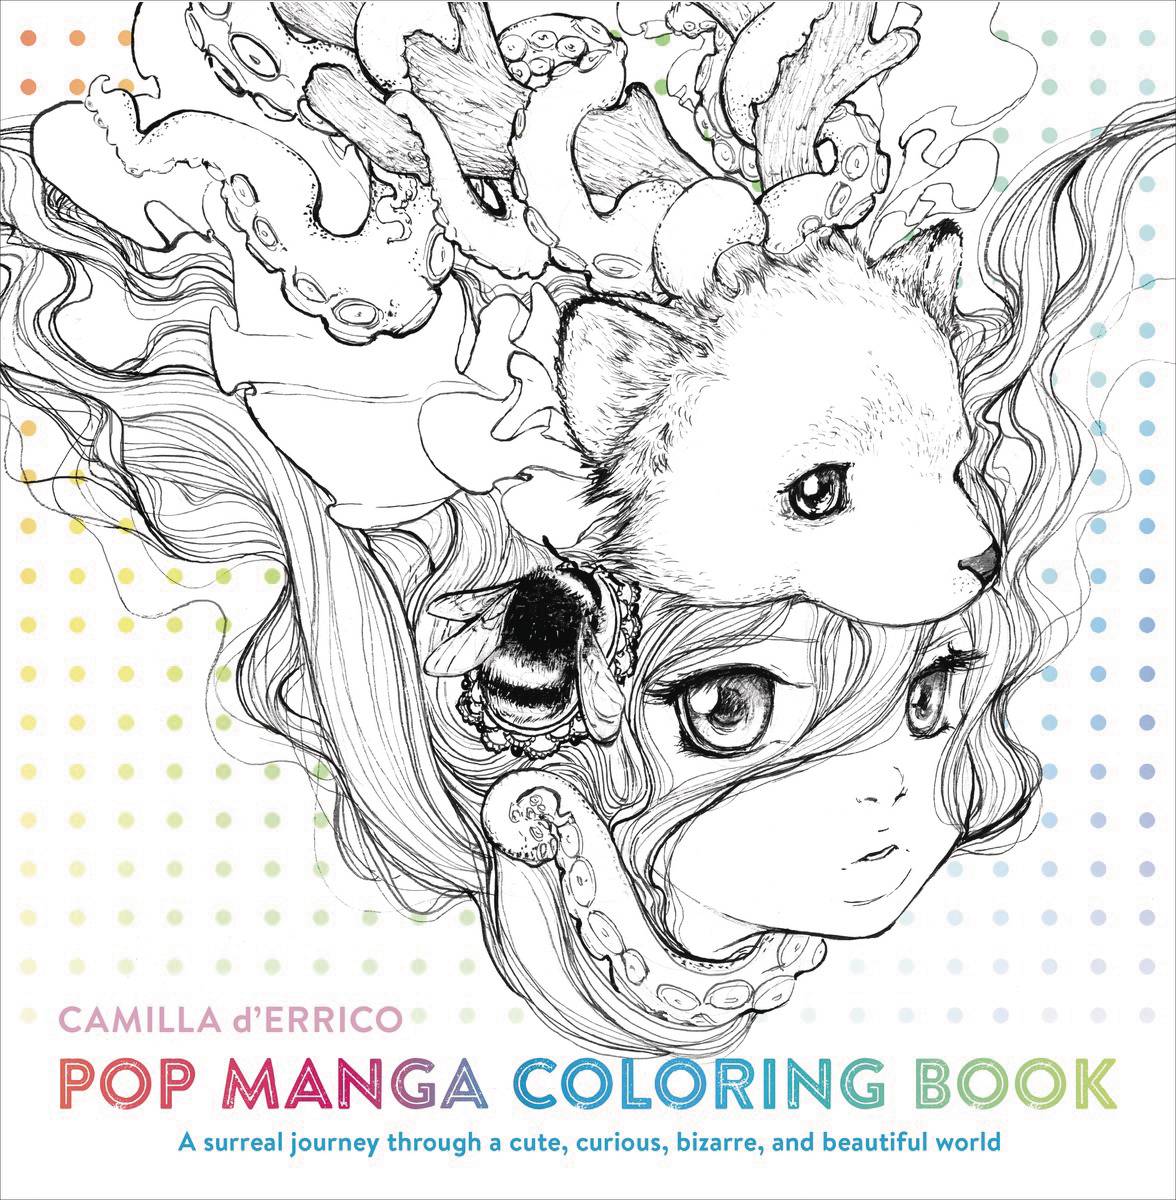 Pop Manga Coloring Book Soft Cover